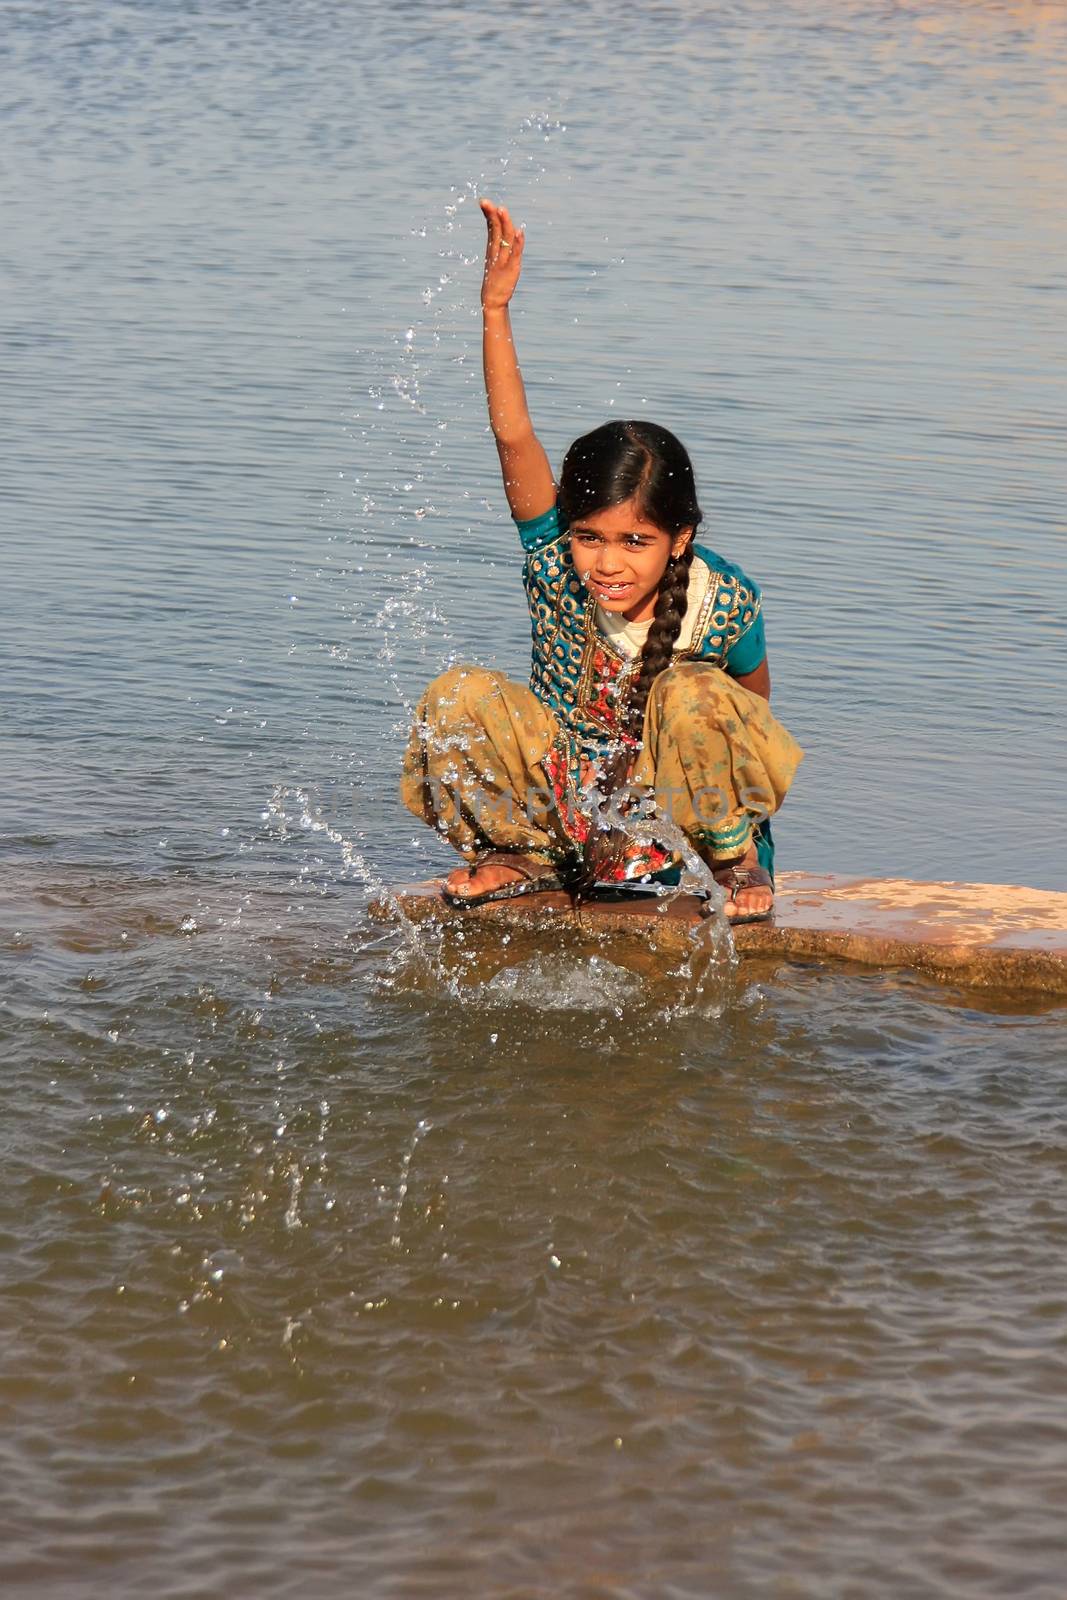 Local girl playing near water reservoir, Khichan village, Rajasthan, India